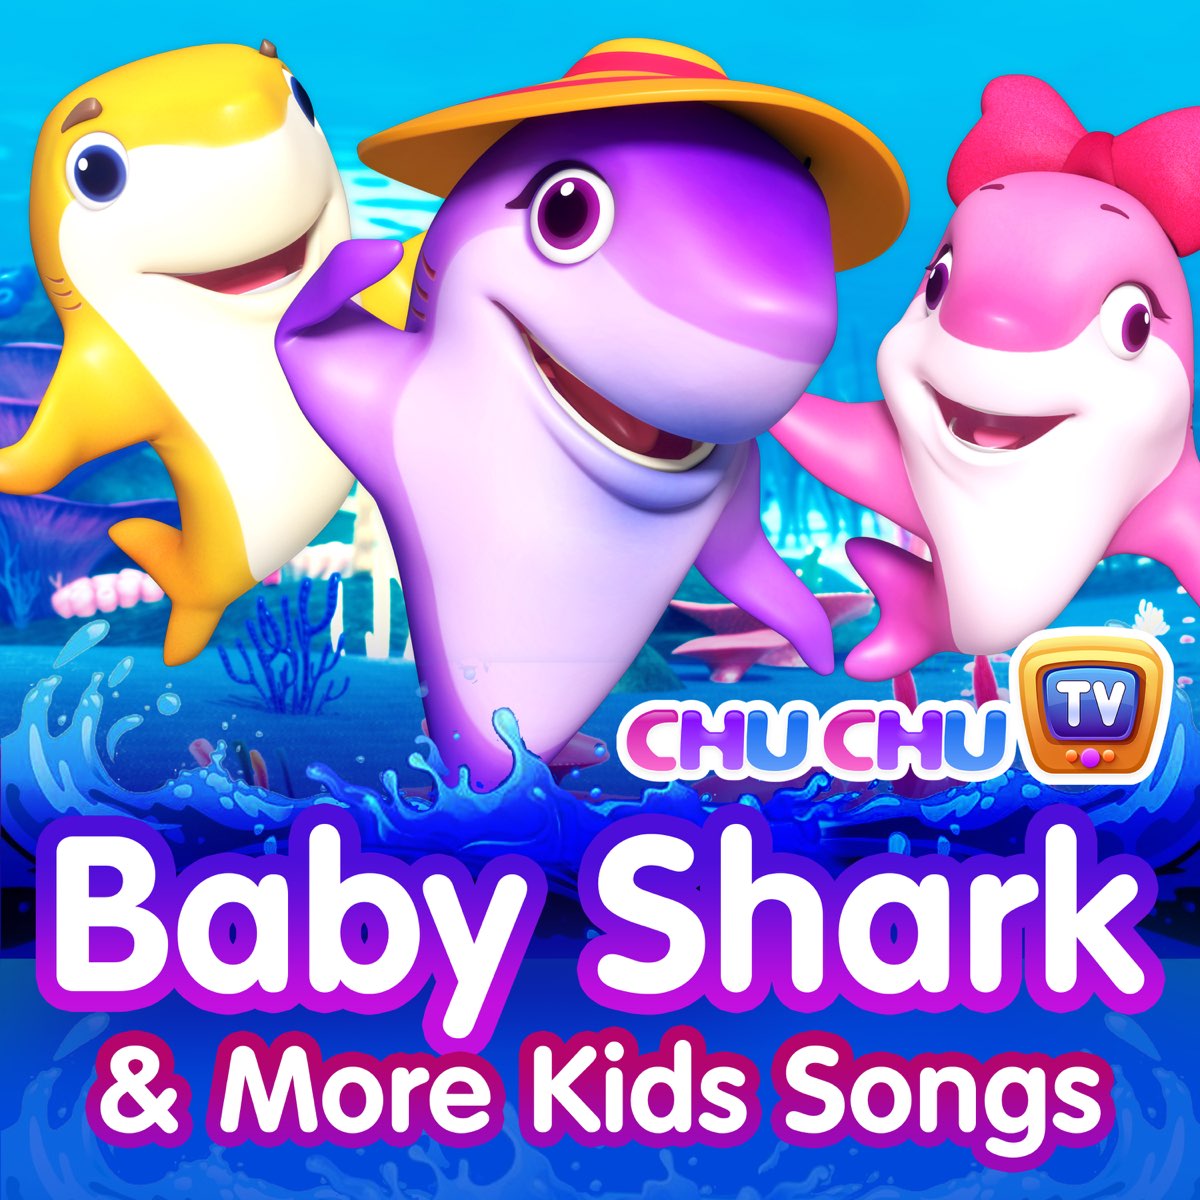 Baby Shark & More Kids Songs By Chuchu Tv On Apple Music